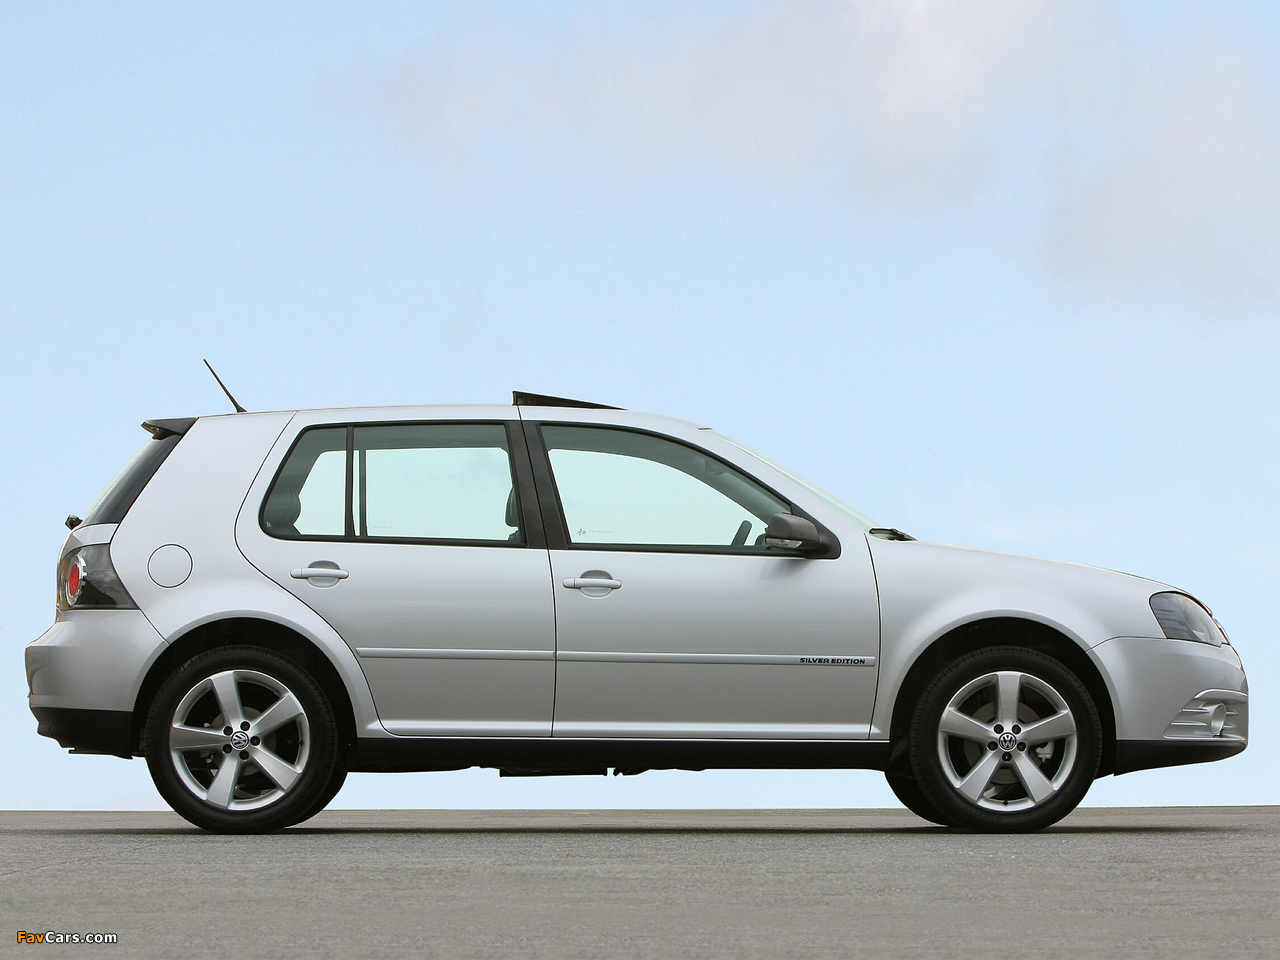 Volkswagen Golf Silver Edition BR-spec (Typ 1J) 2009 pictures (1280 x 960)